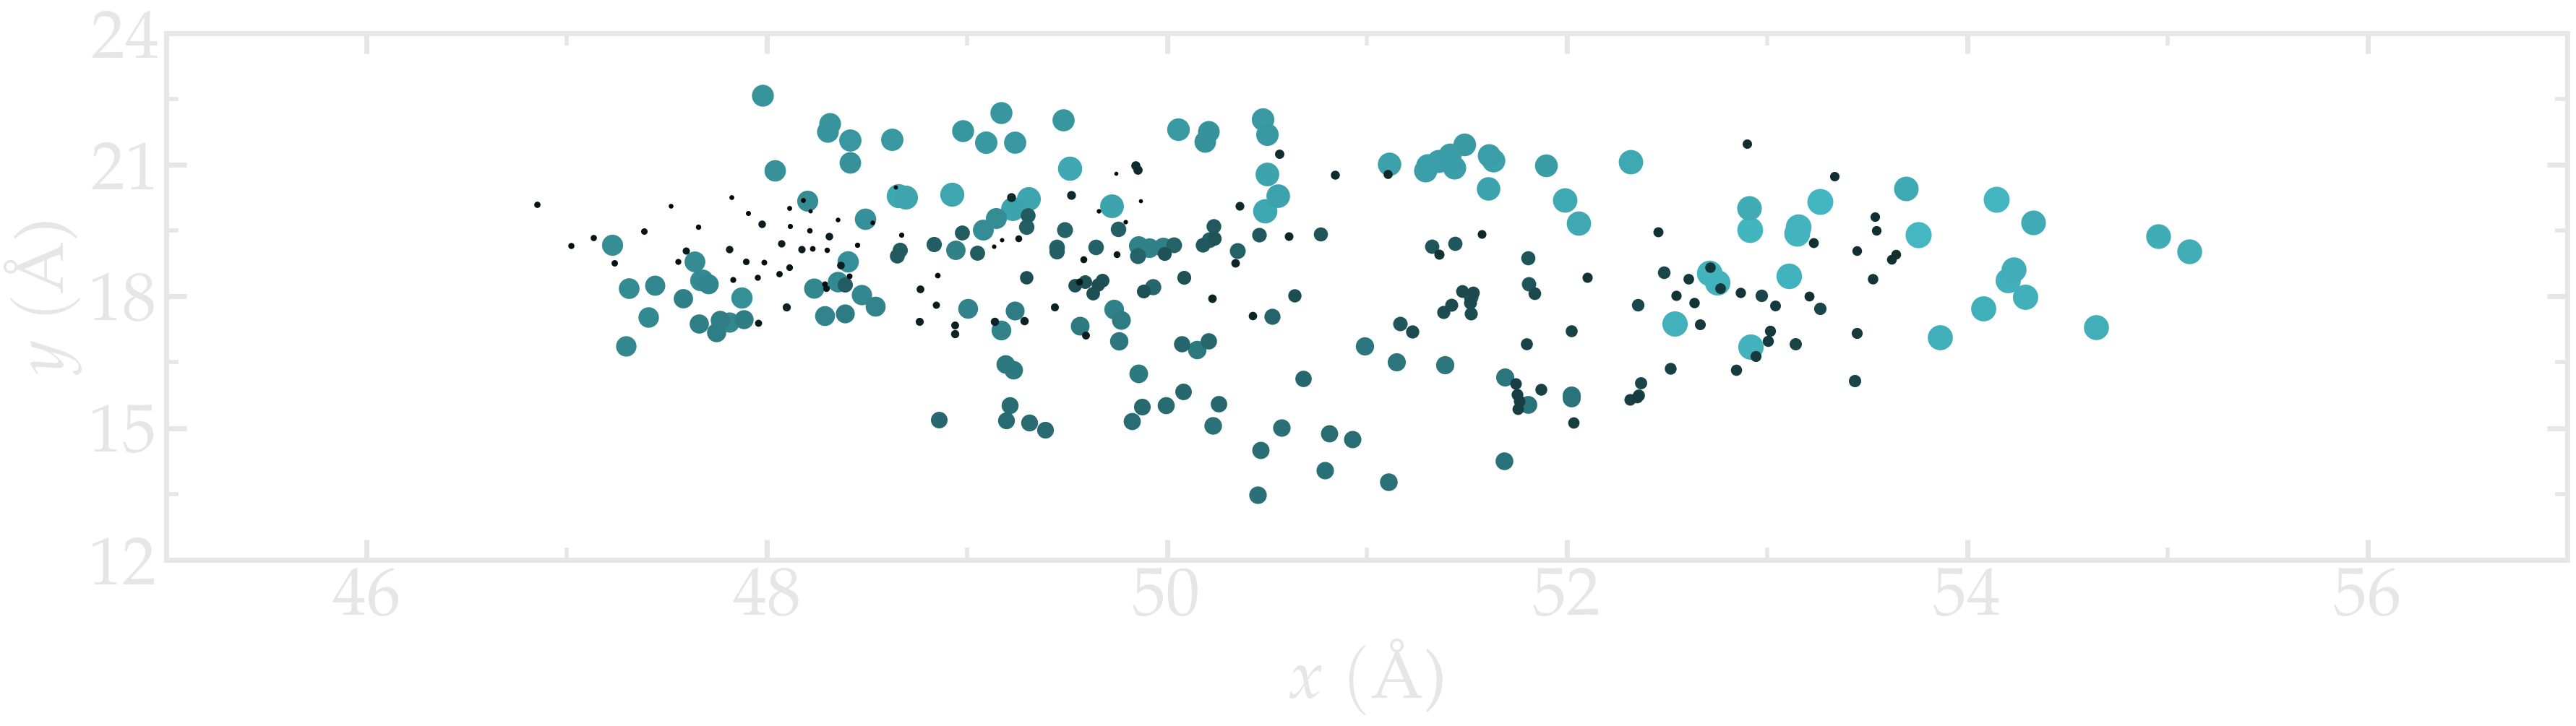 plot of the position-atom